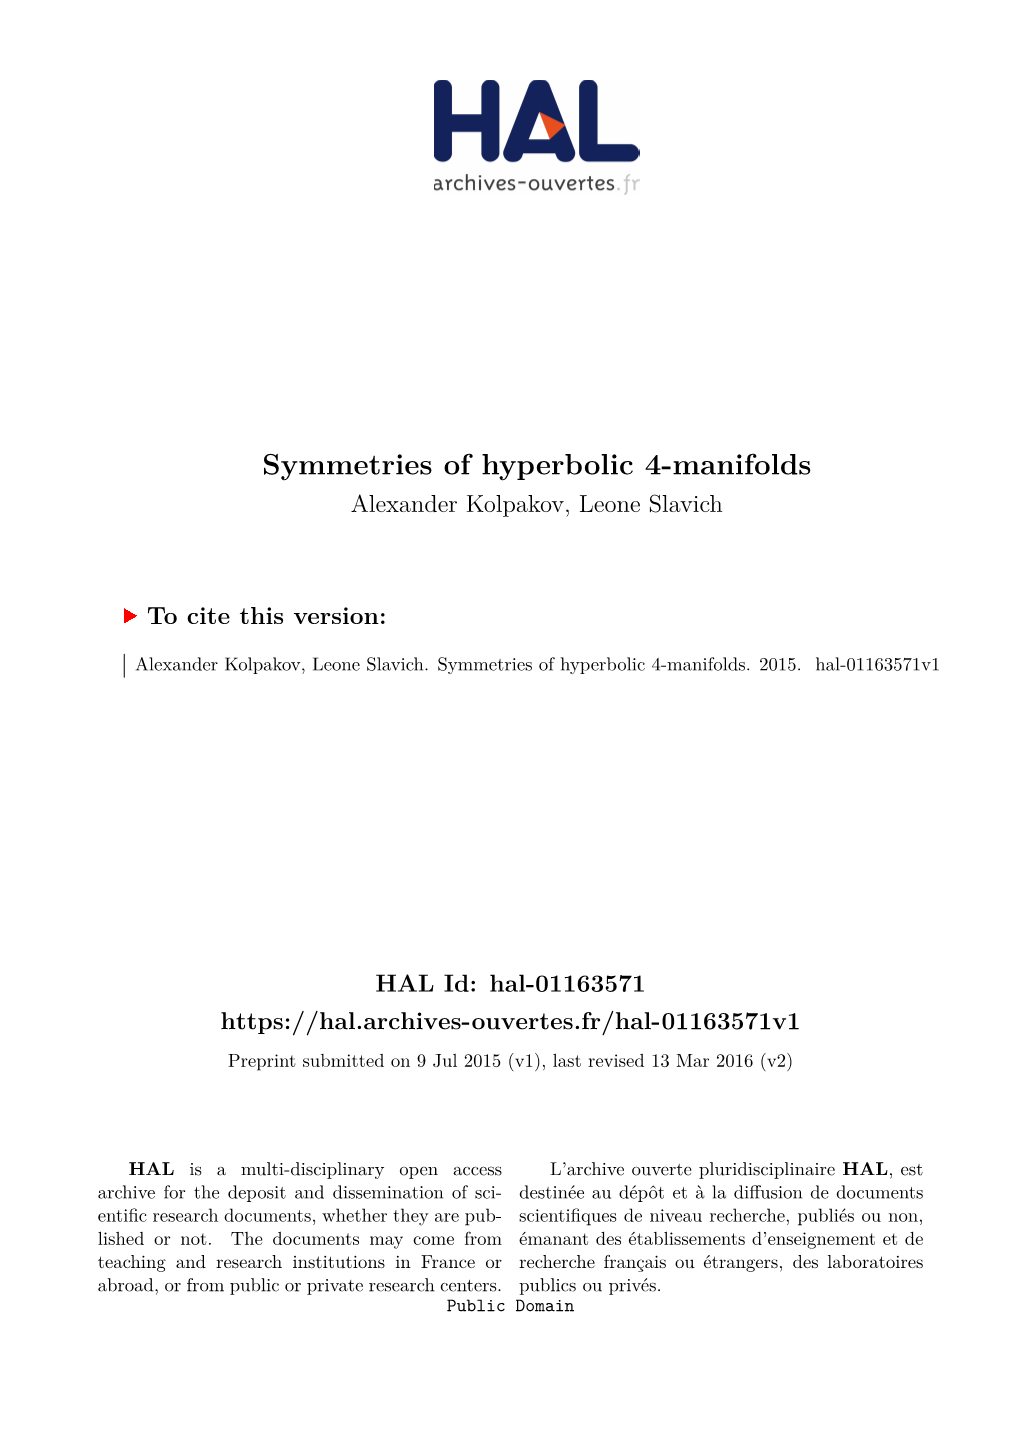 Symmetries of Hyperbolic 4-Manifolds Alexander Kolpakov, Leone Slavich